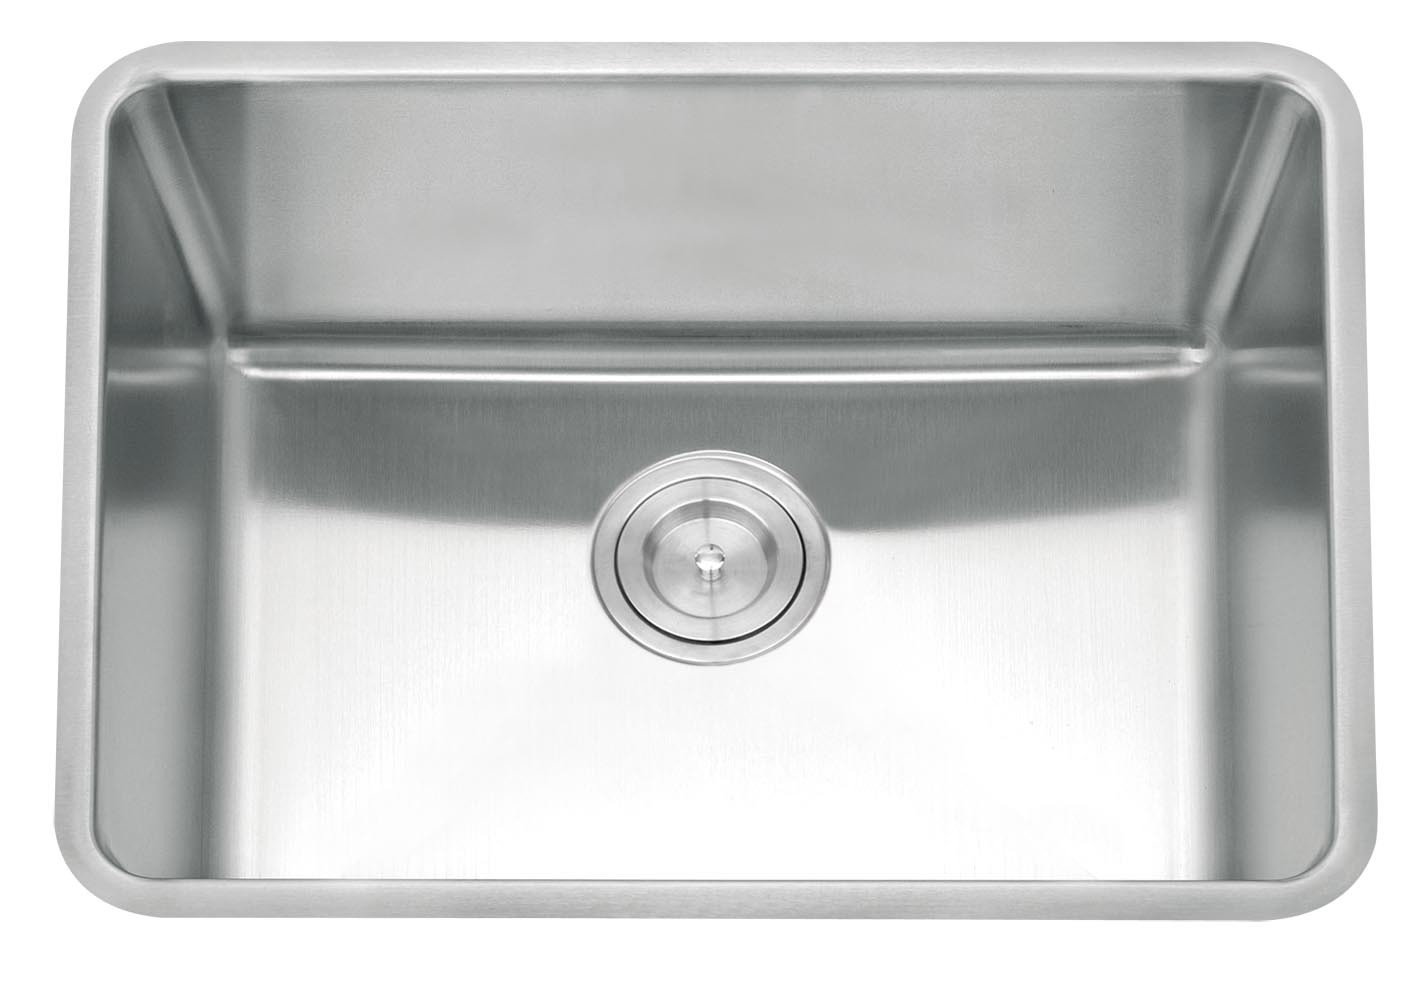 Small Radius Stainless Steel Sink, Kitchen Sink (A02)